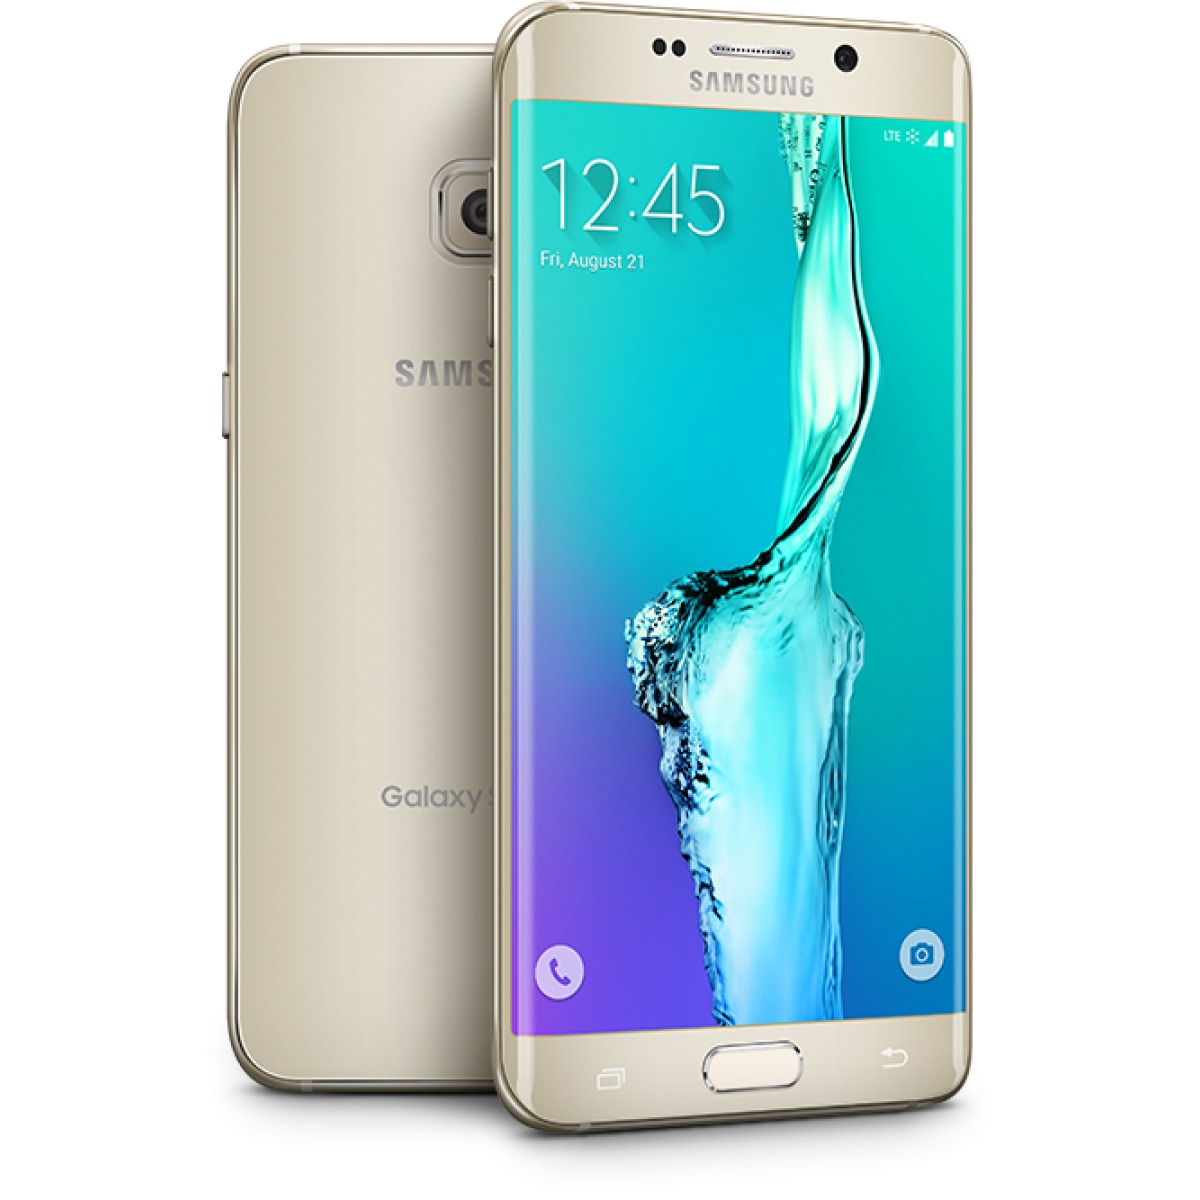 Samsung Galaxy S6 Edge + Plus Sm-g928 Nuevo Caja Sellada - $ 10,799.00